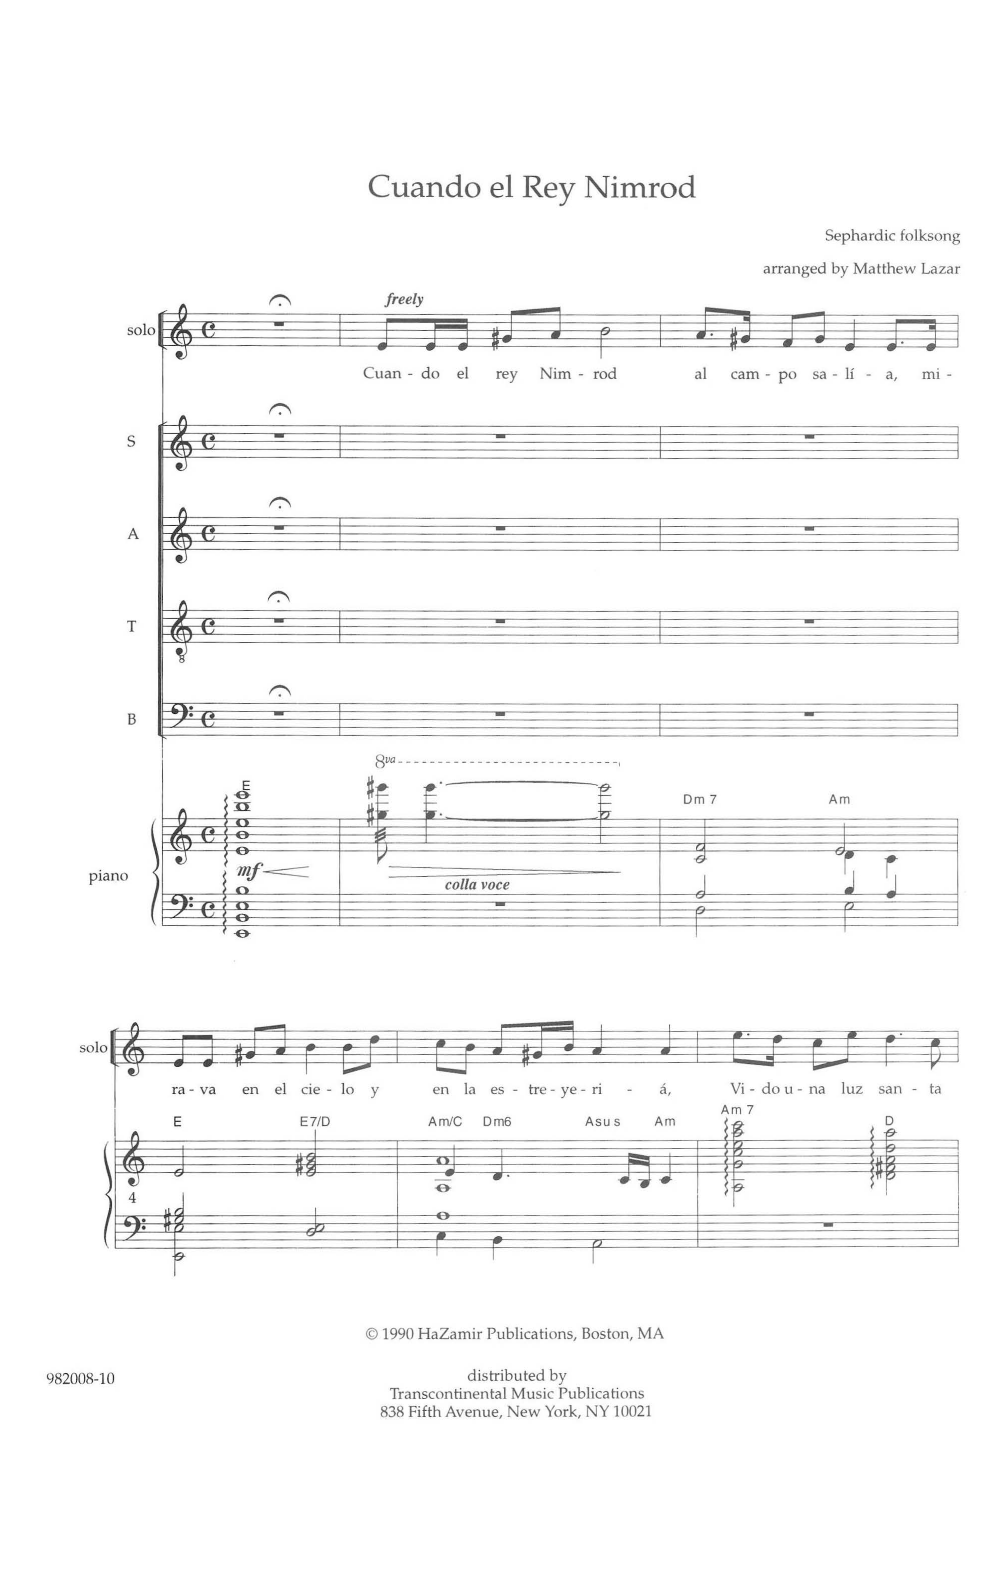 Download Matthew Lazar Cuando el Rey Nimrod Sheet Music and learn how to play SATB Choir PDF digital score in minutes